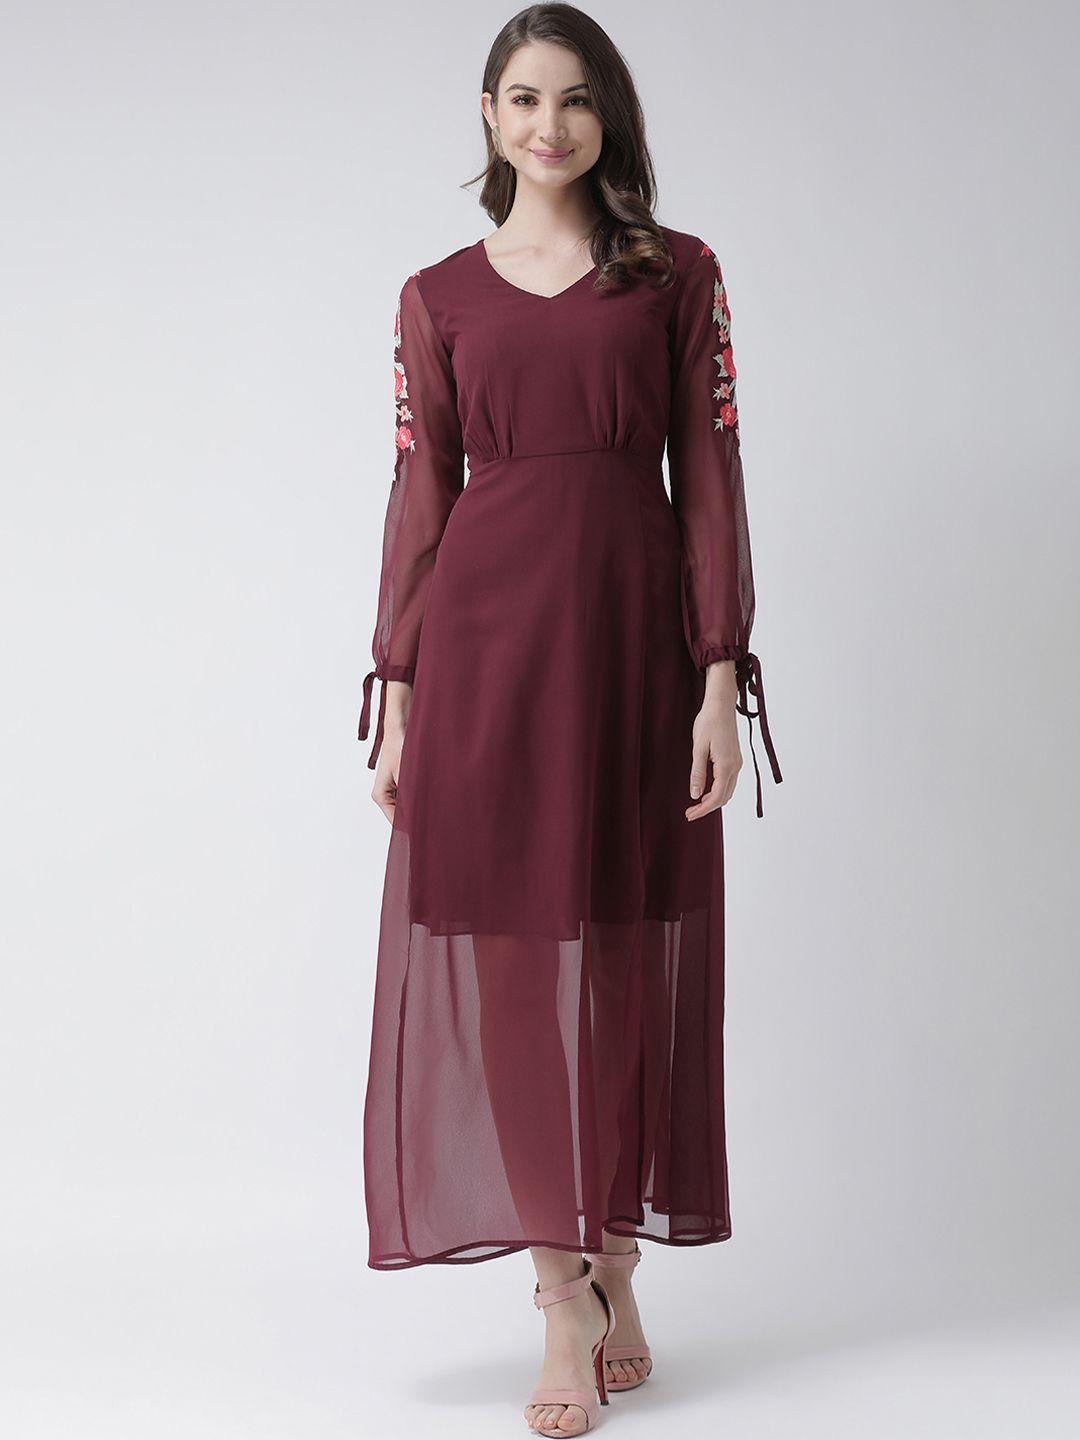 kassually women maroon solid maxi dress